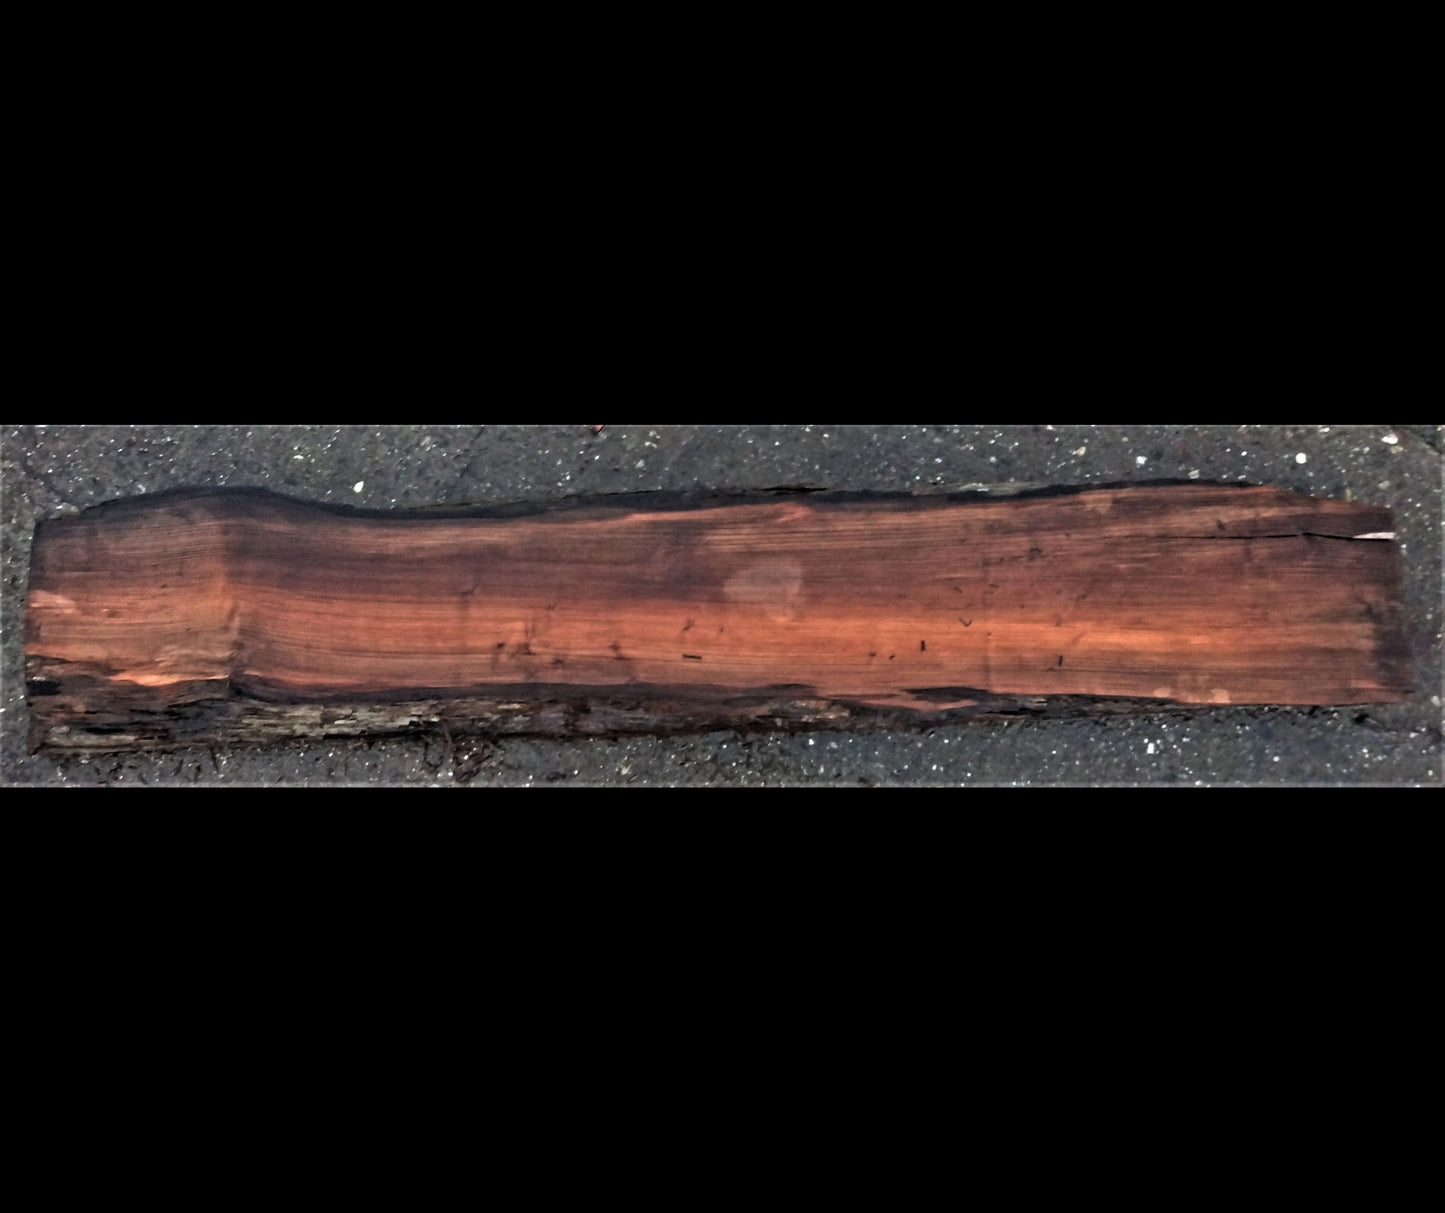 Black redwood | live edge | river table | DIY craft wood | 21-0600-BS